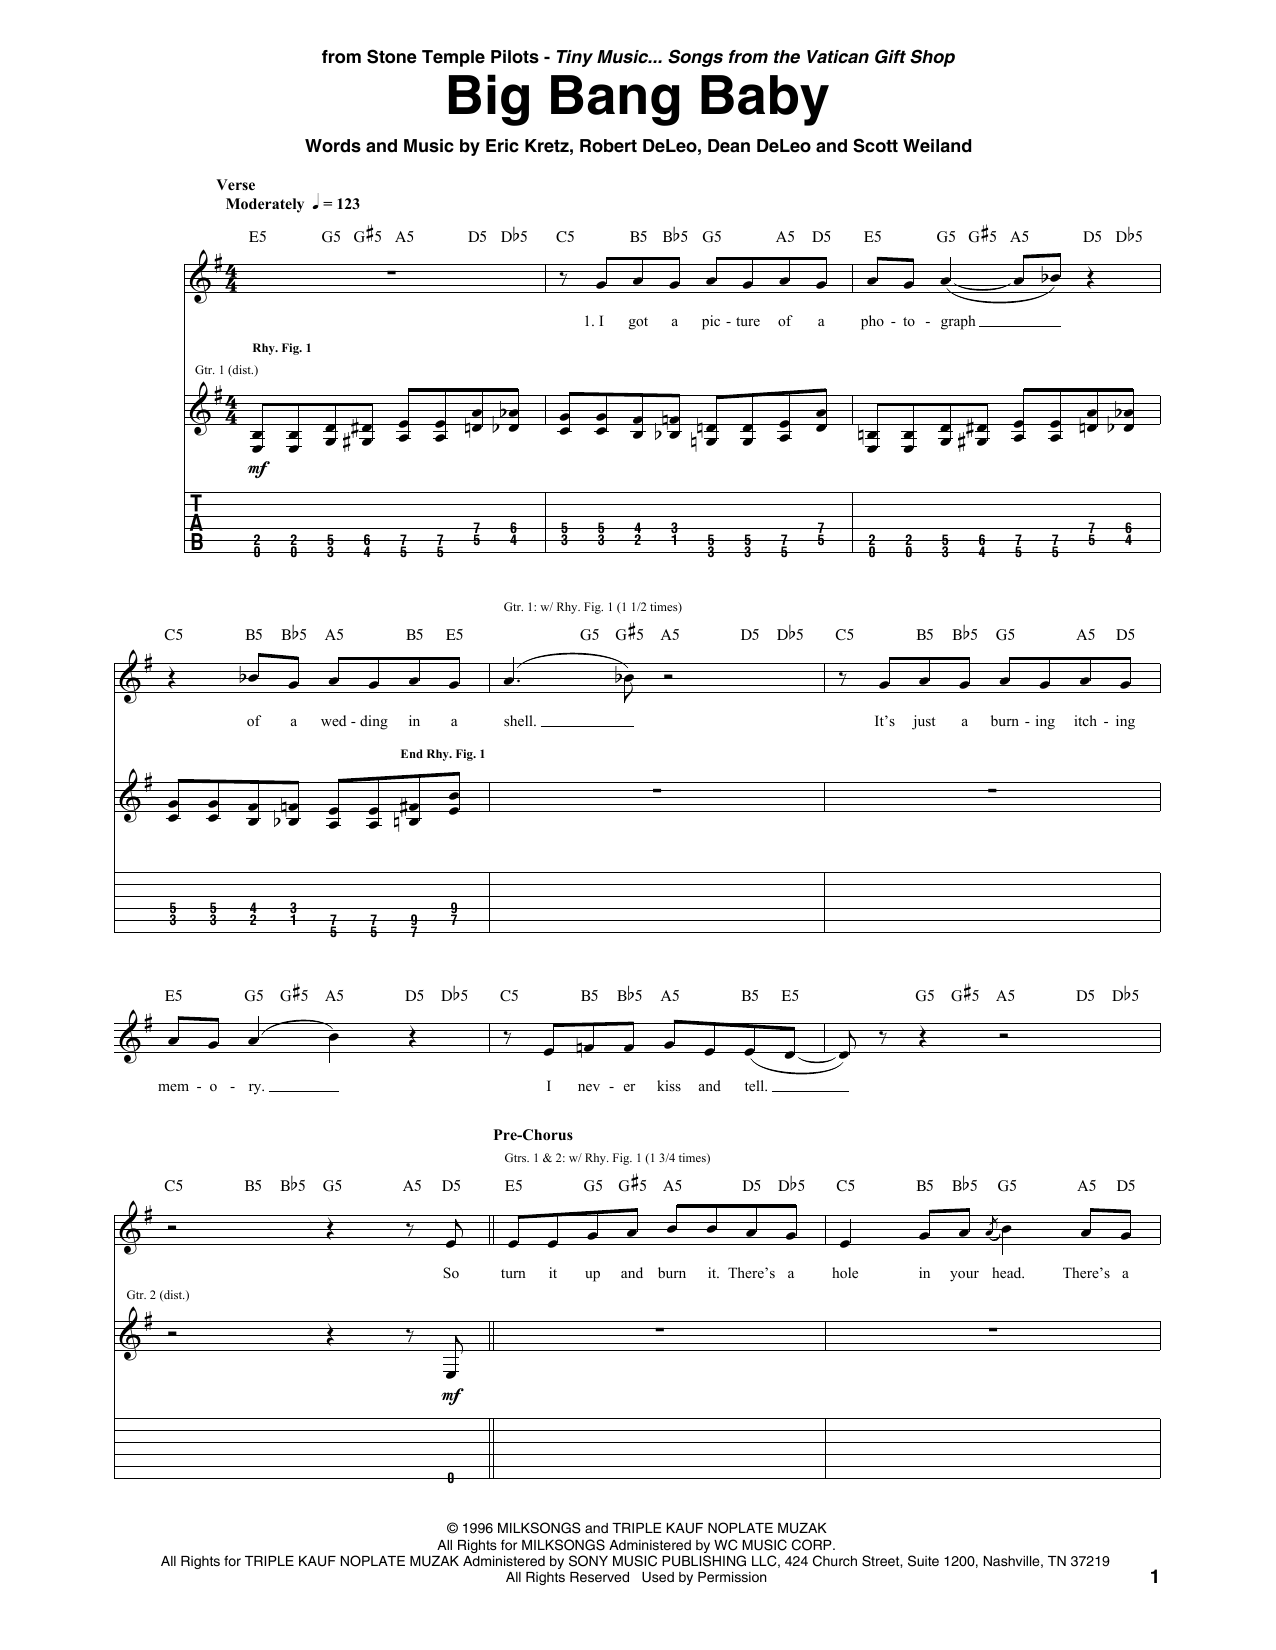 Stone Temple Pilots Big Bang Baby Sheet Music Notes & Chords for Guitar Tab - Download or Print PDF